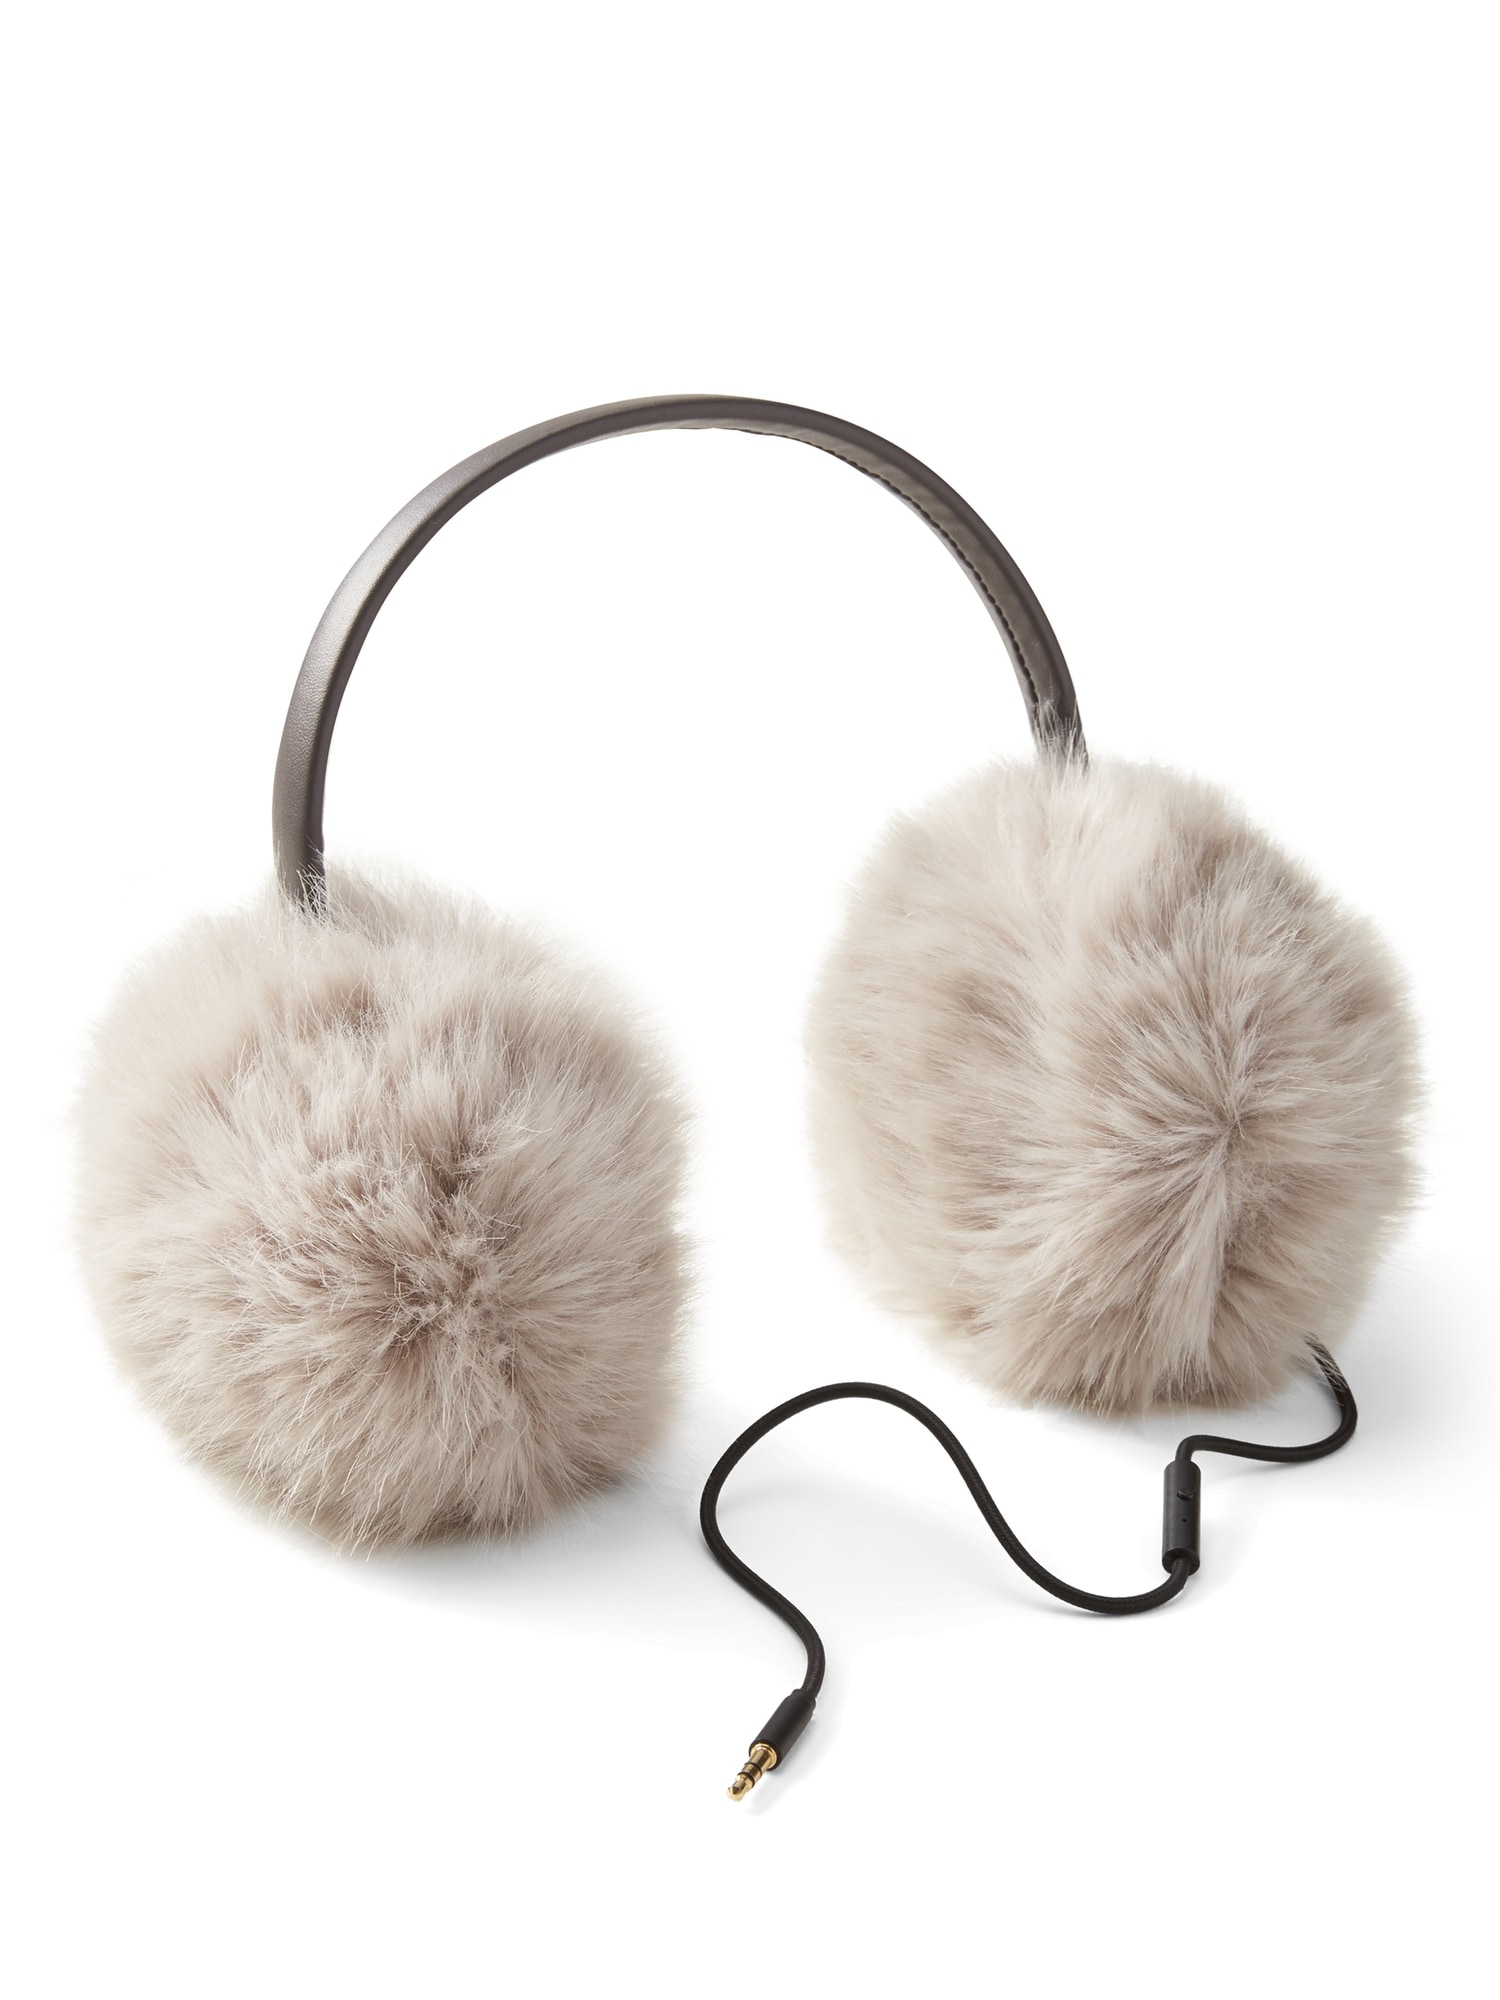 Faux Fur Earmuffs with Headphones